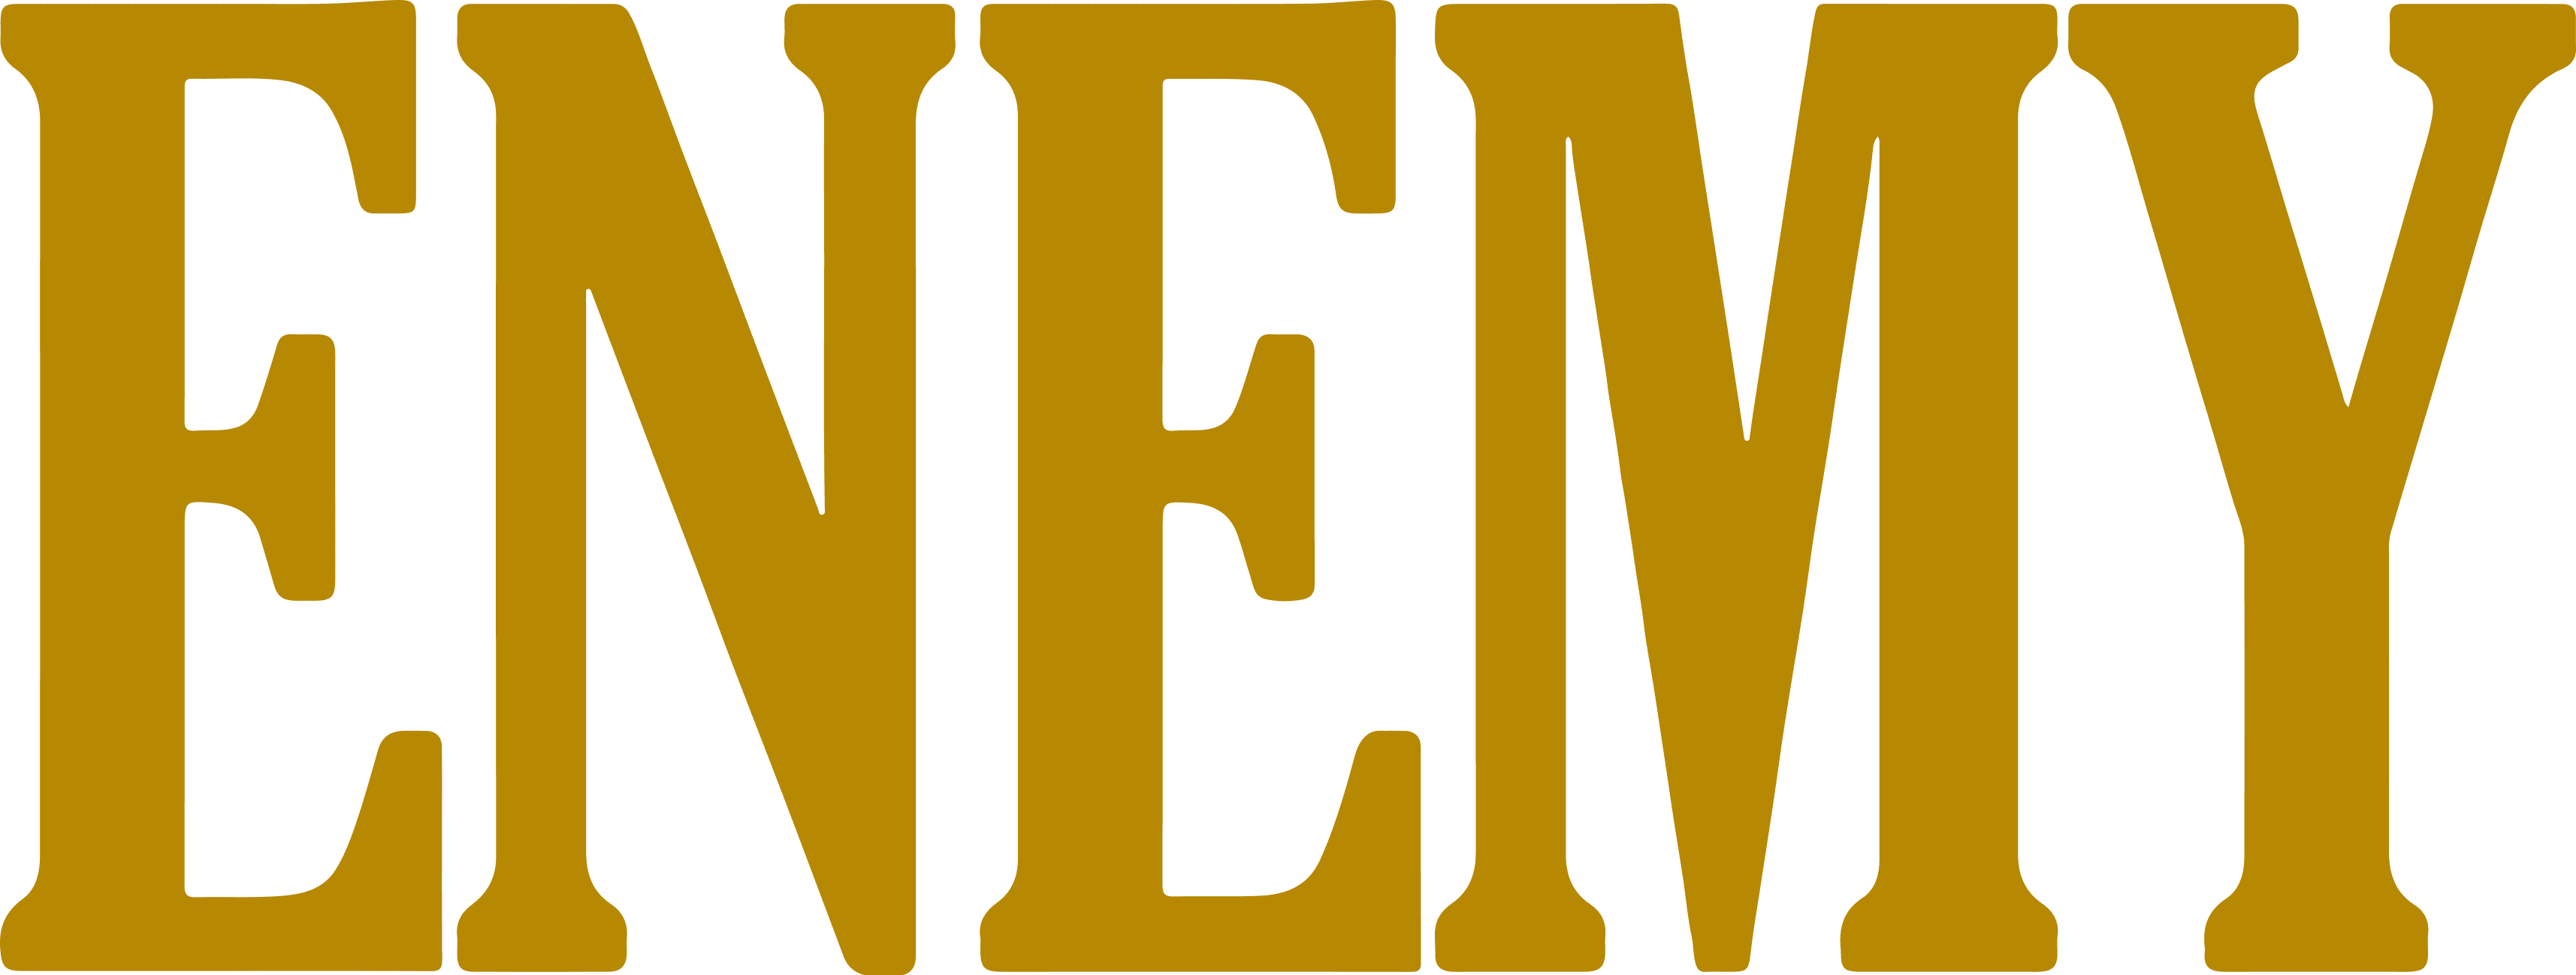 Enemy logo